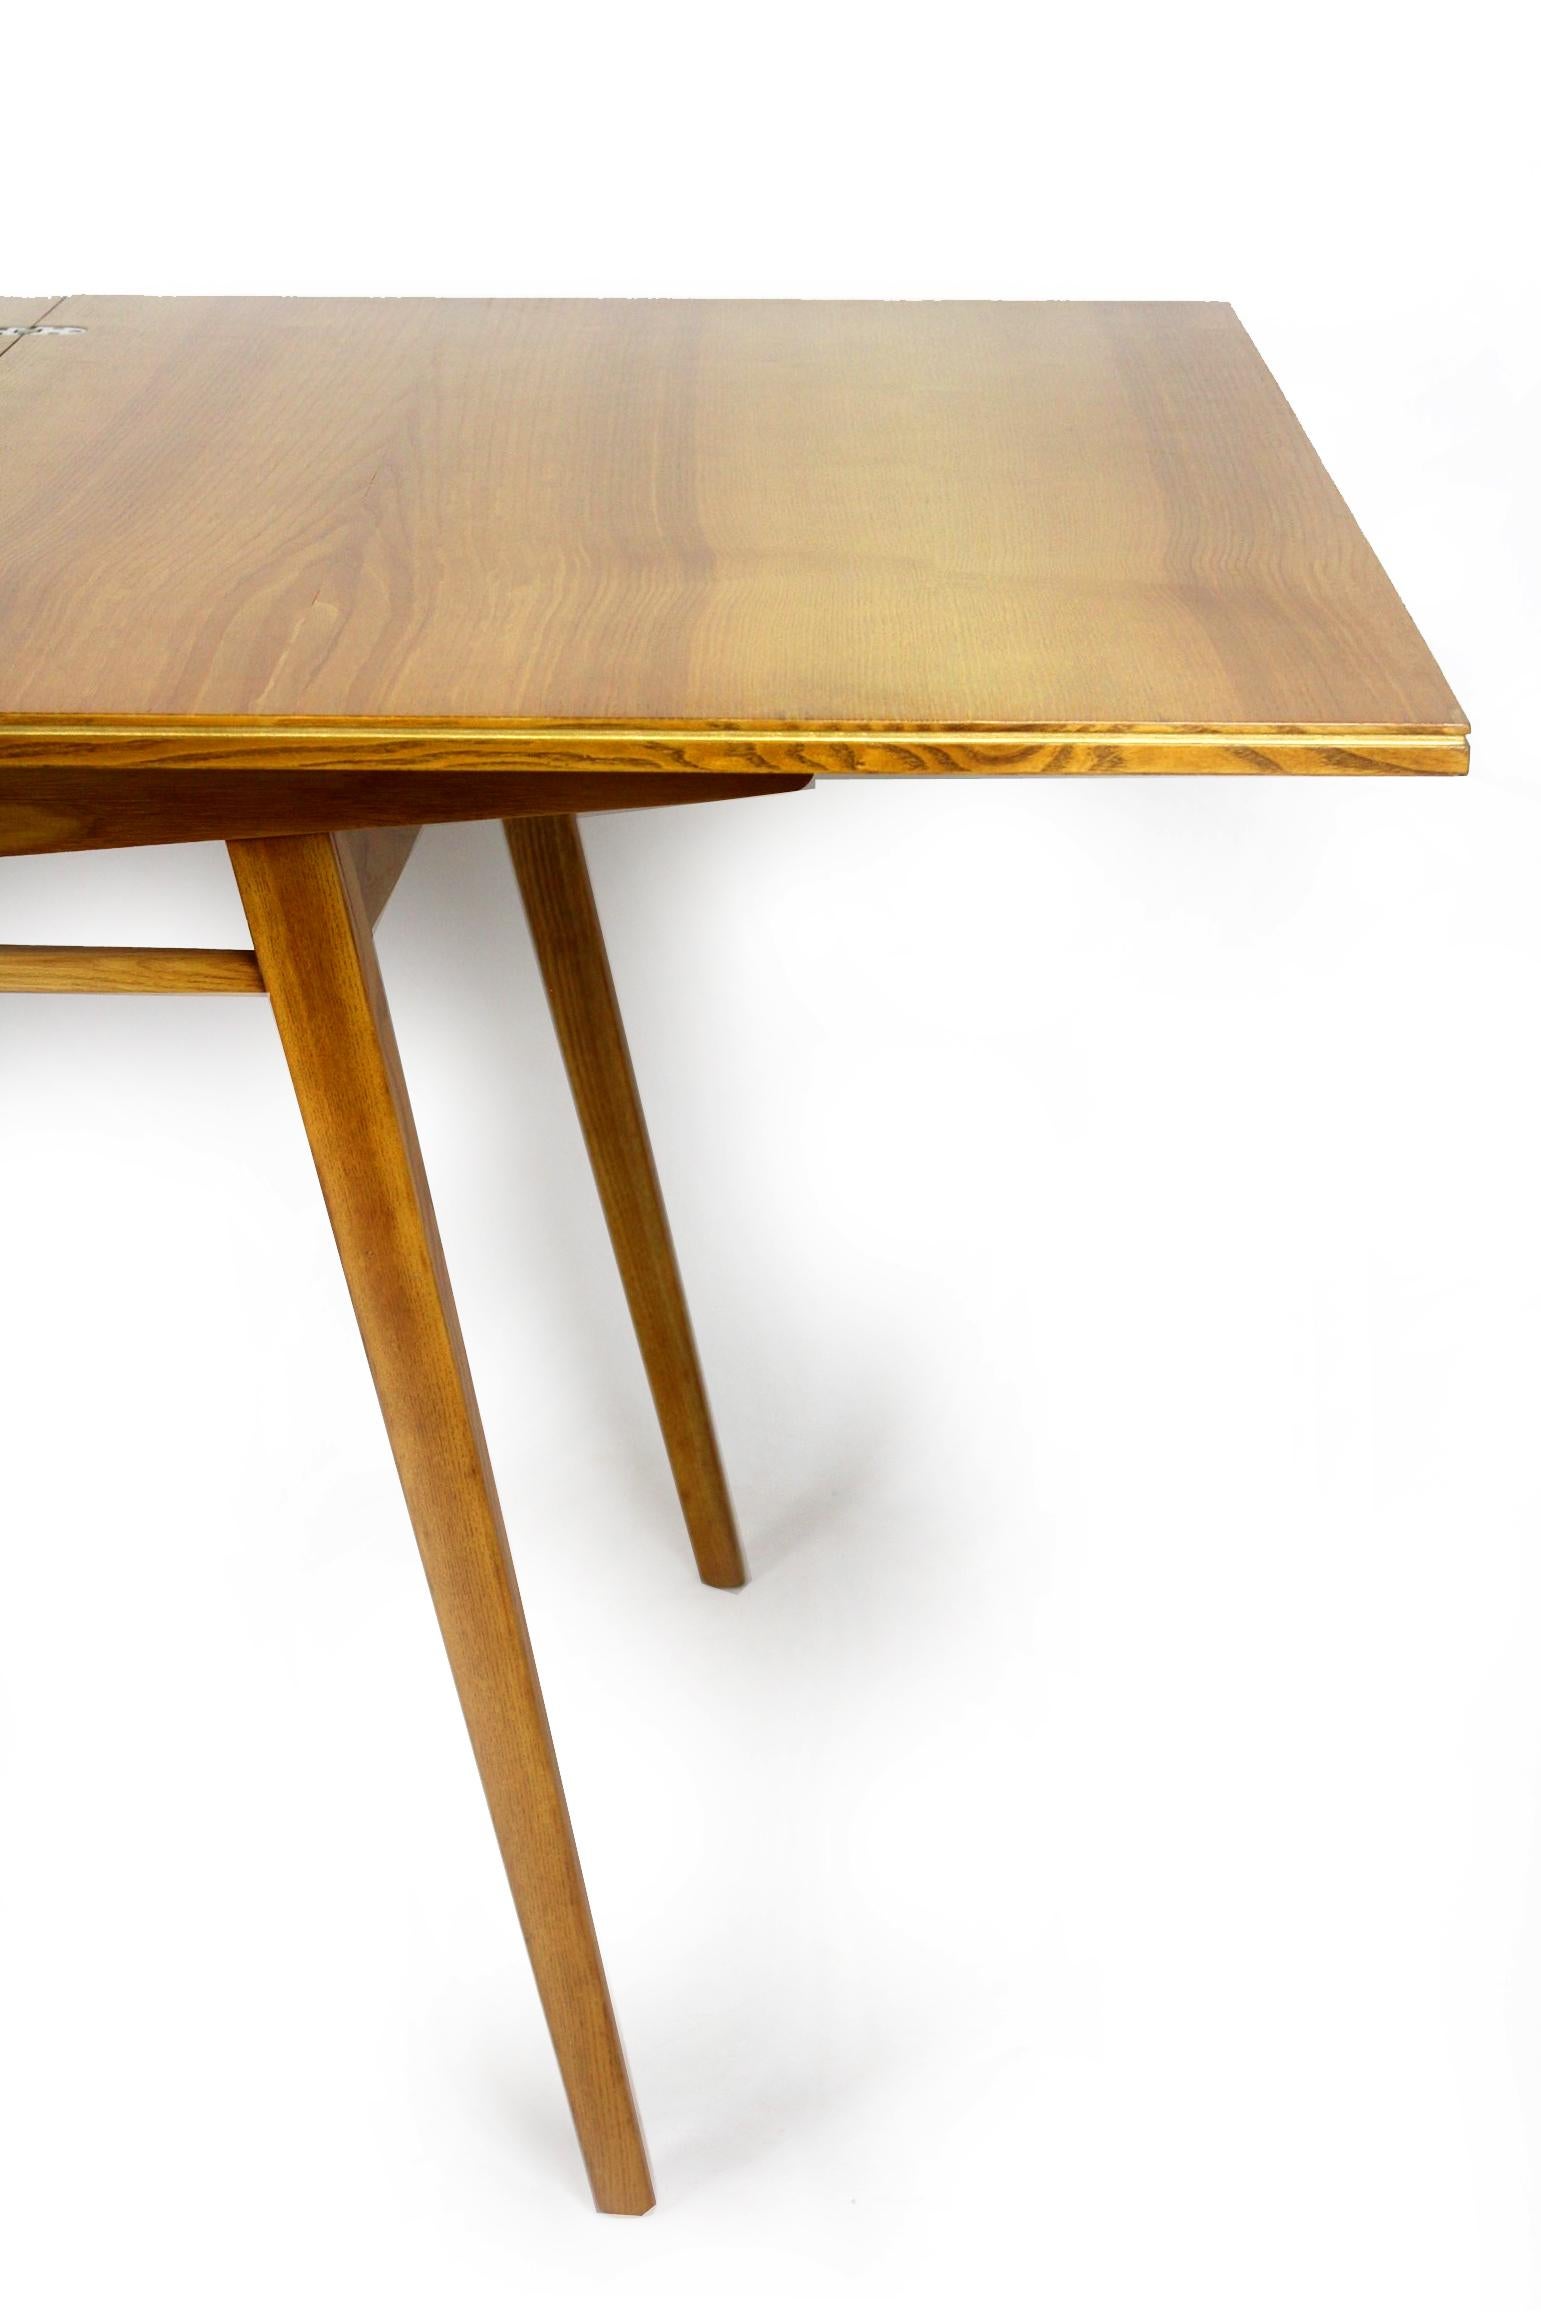 Restored Ash Veneered Extendable Table, 1960s For Sale 4